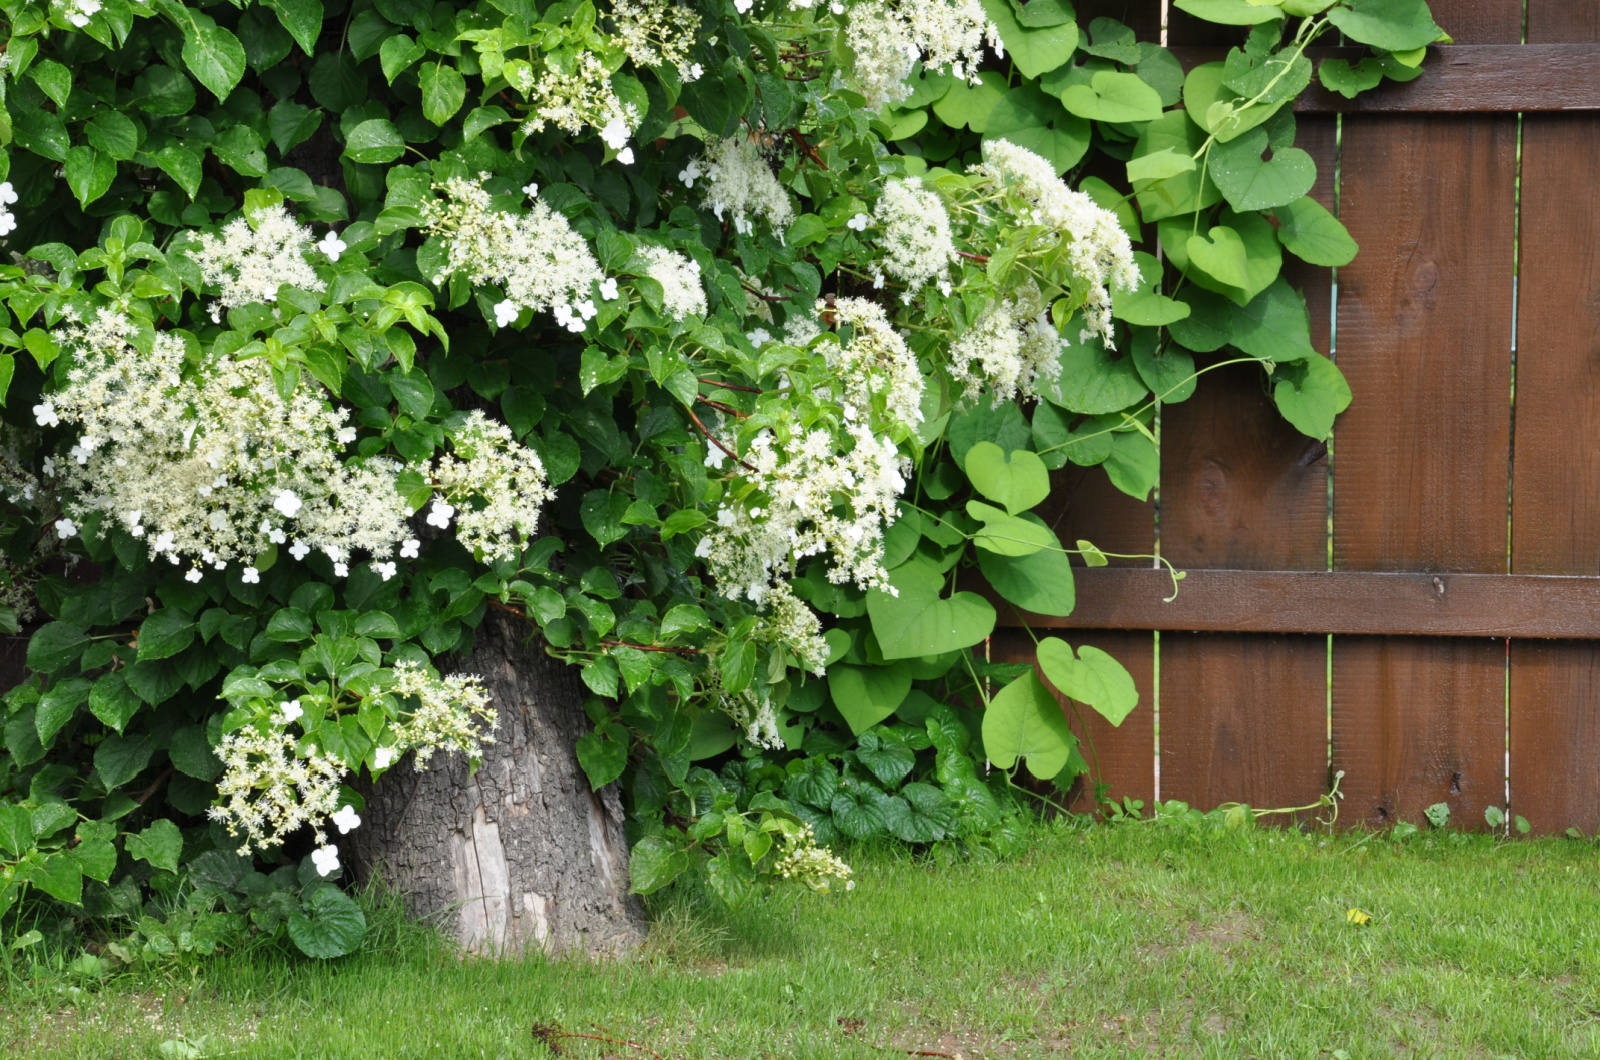 Hydrangea vine on wooden fence